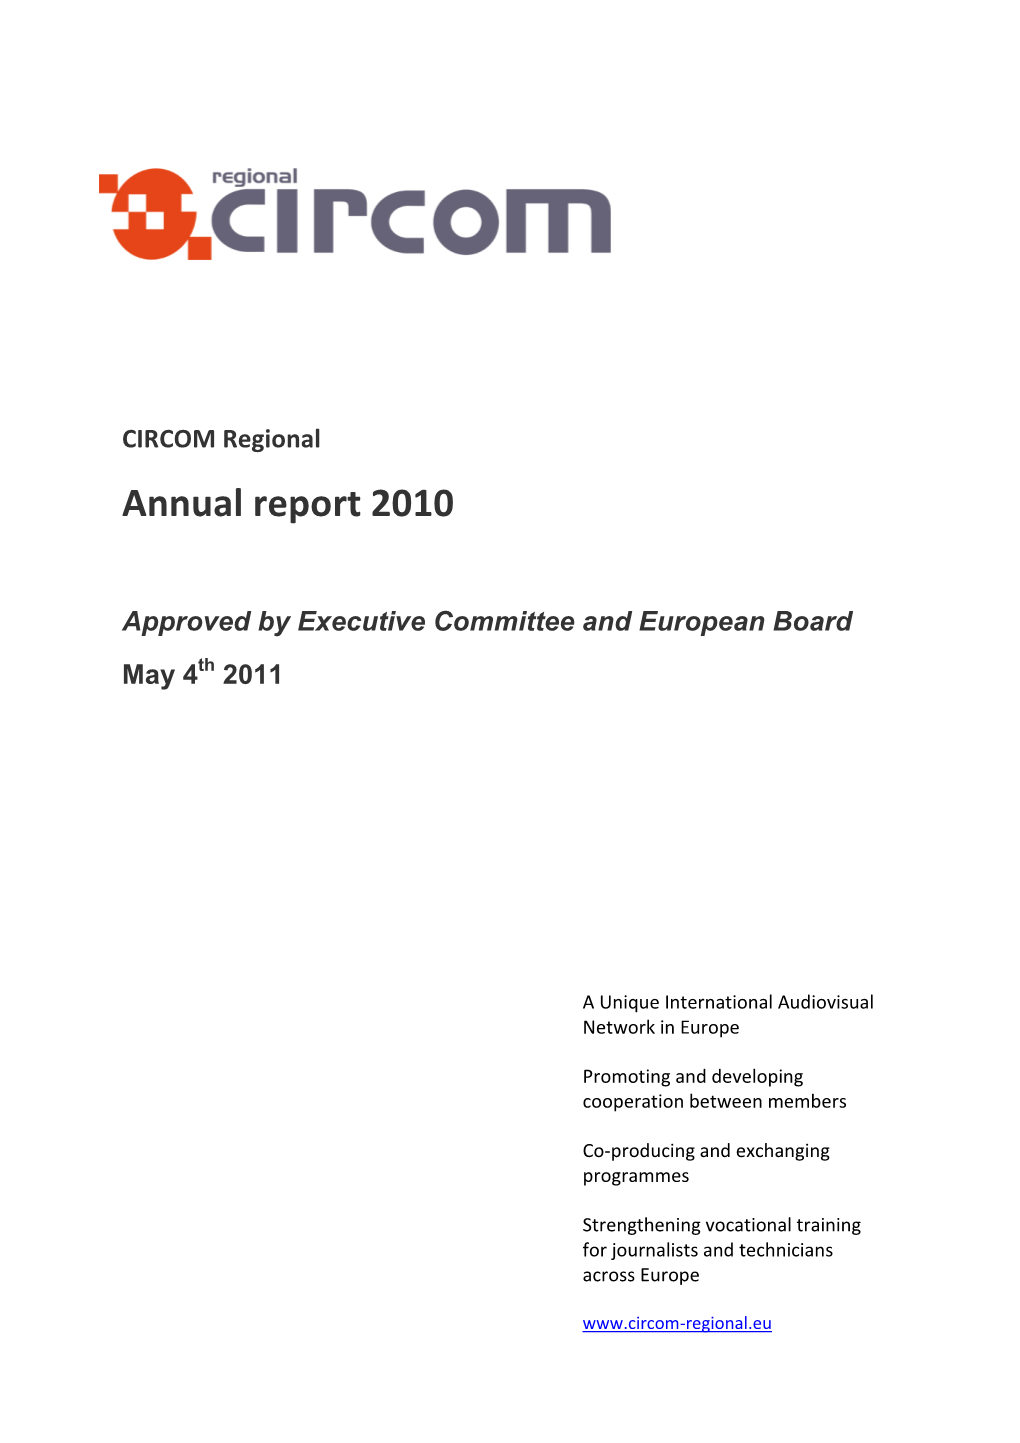 Circom Regional Annual Report 2010 FINAL 050611